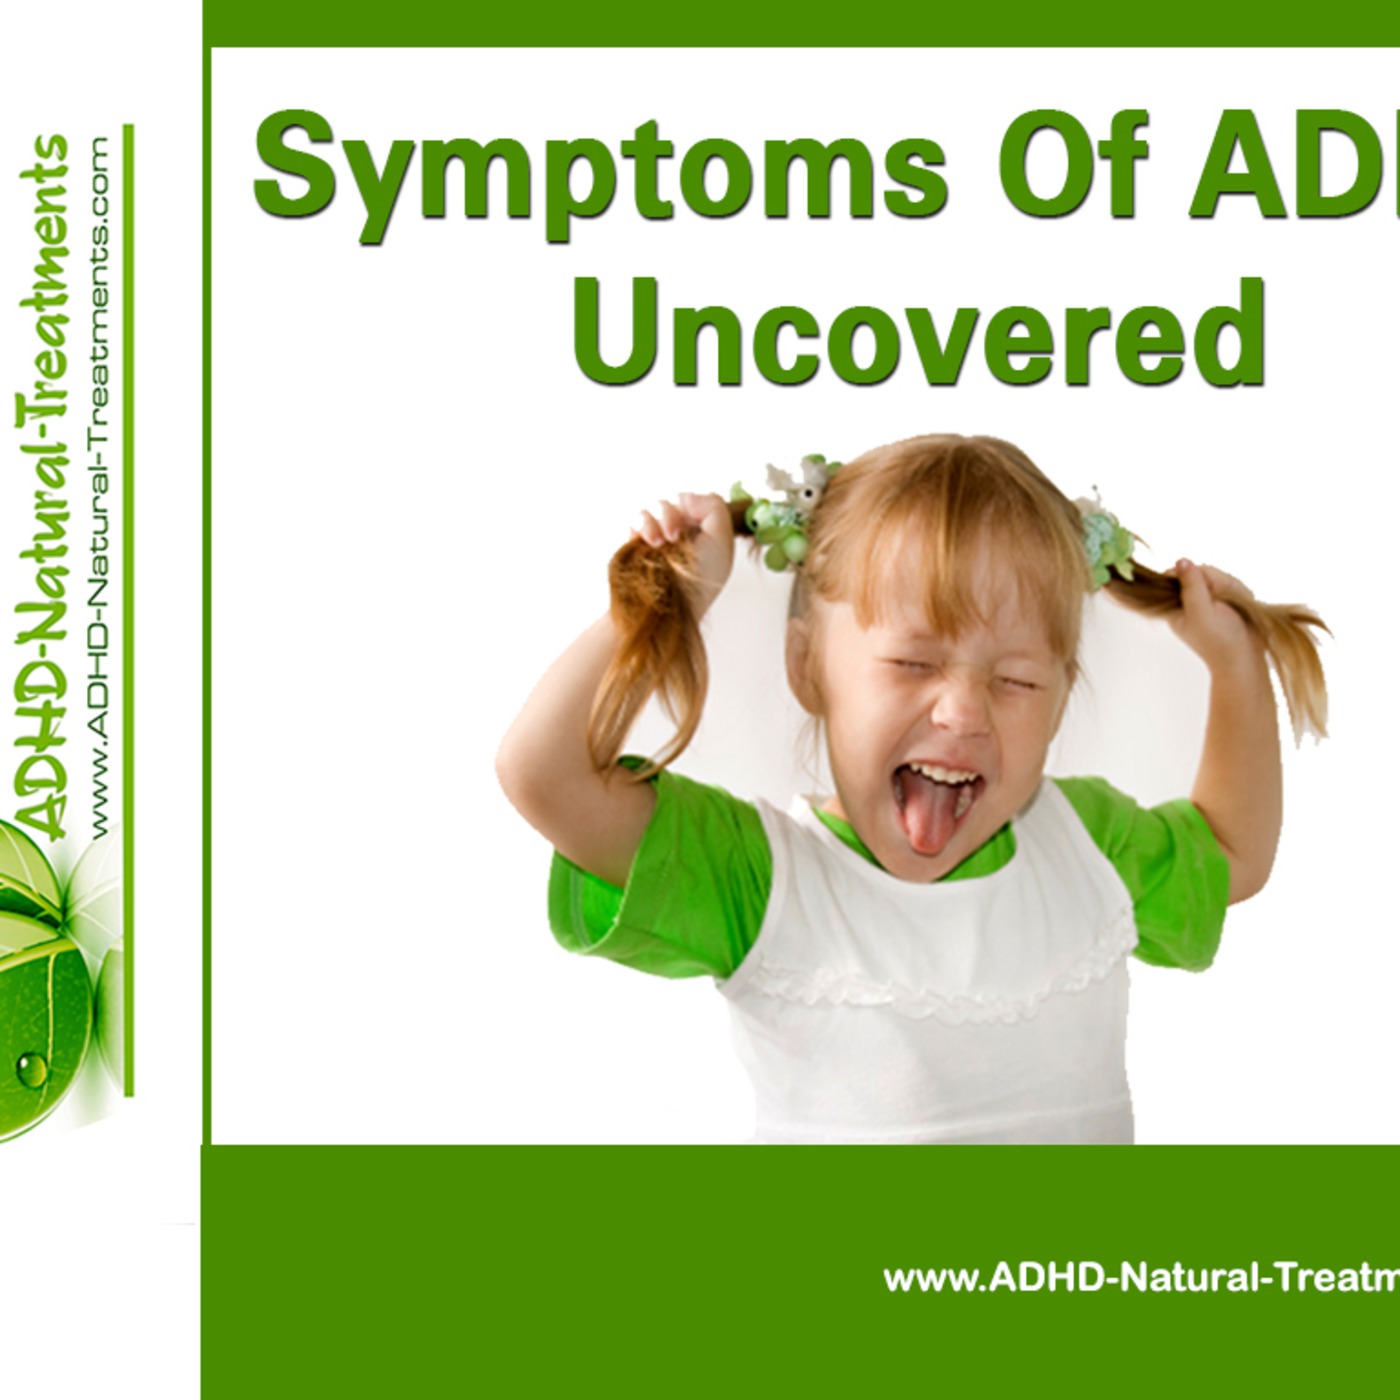 Symptoms Of ADHD - ADHD Symptoms - Signs Of ADHD - ADHD Signs